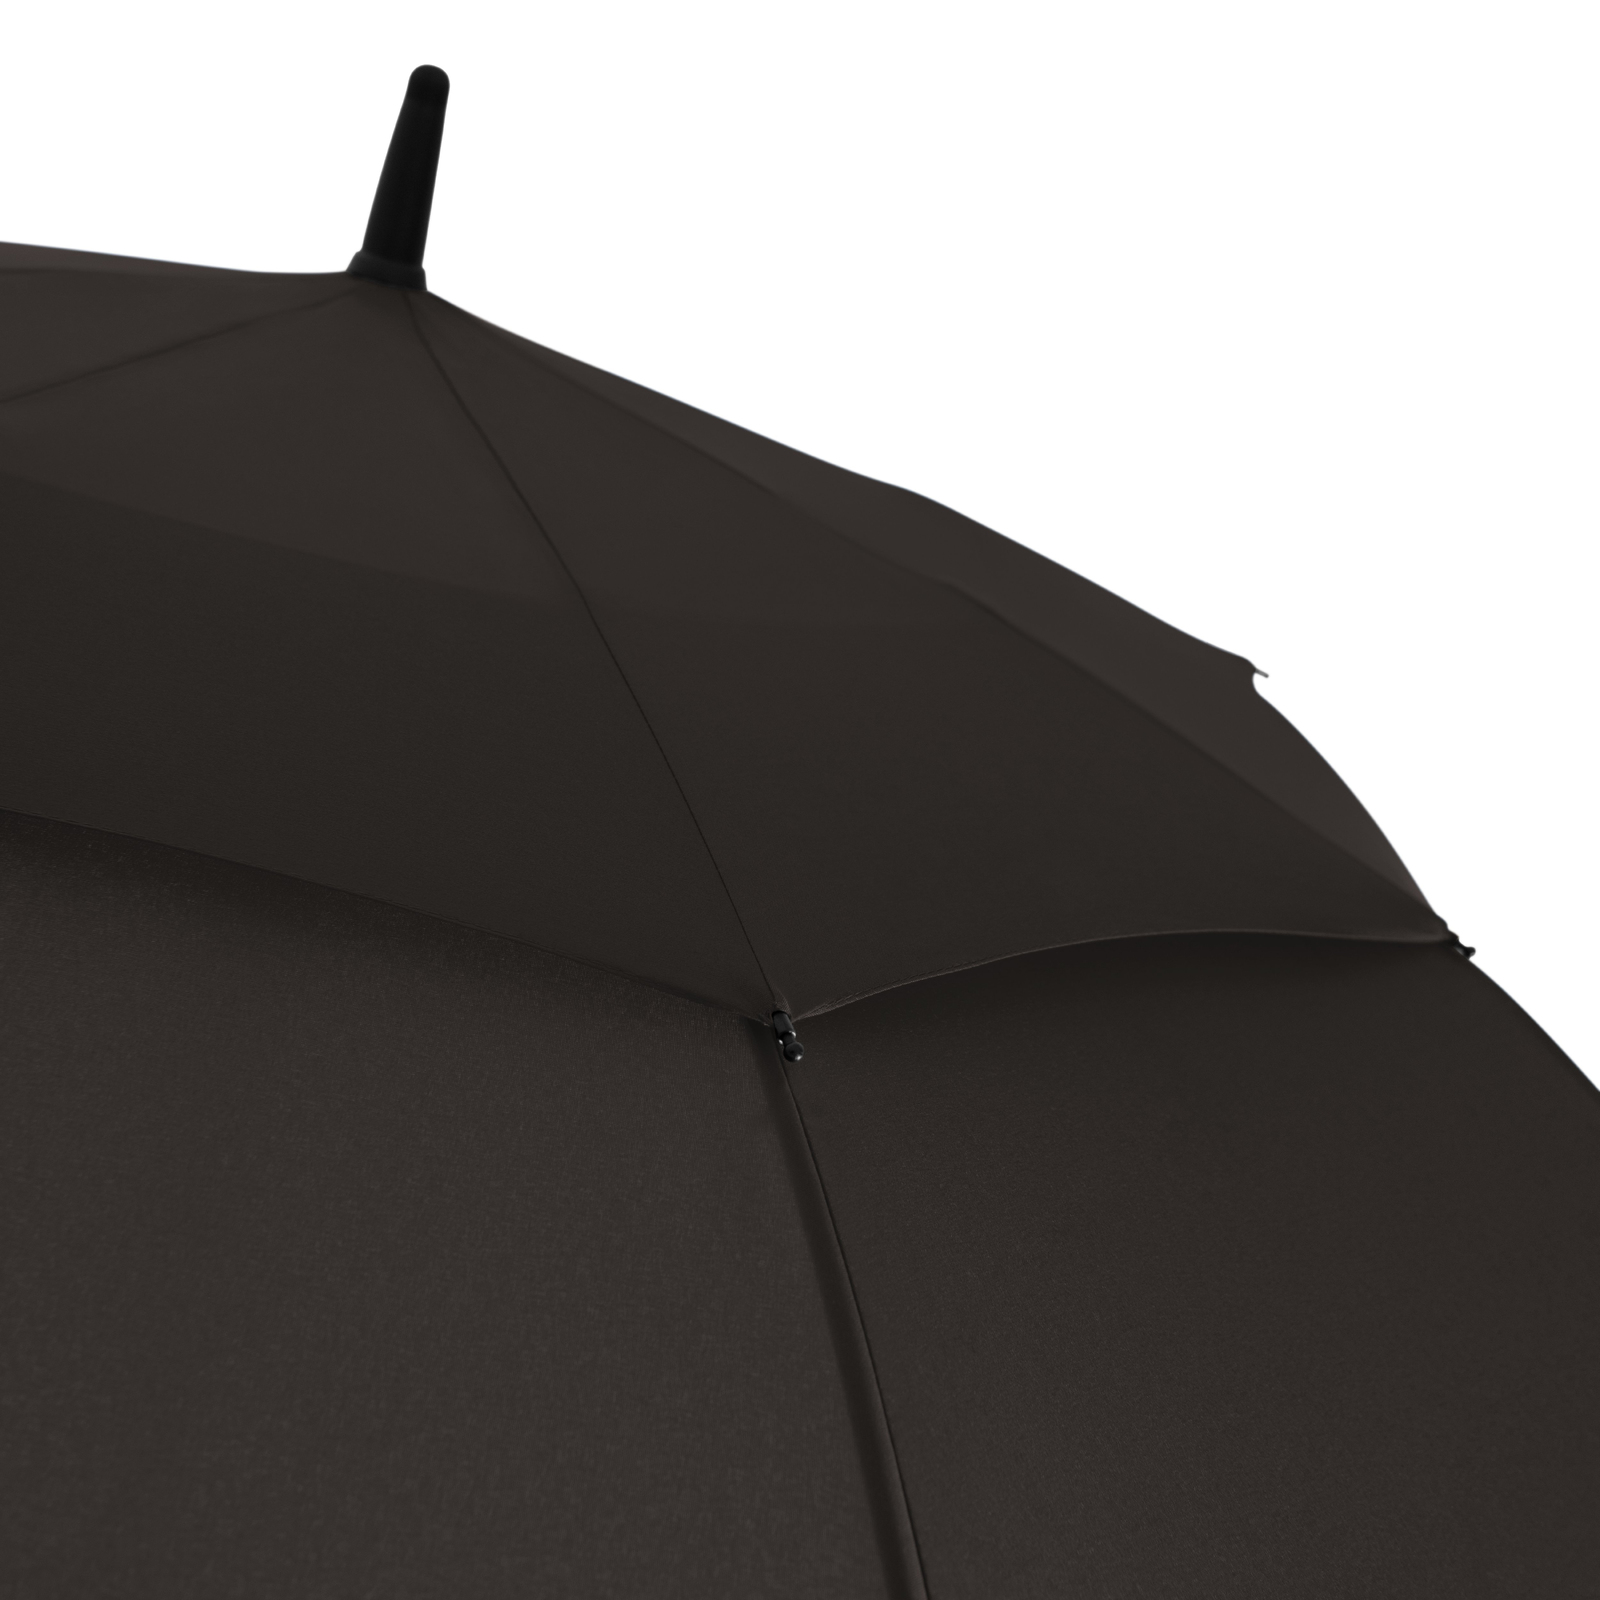 Doppler Air Golf Black Umbrella